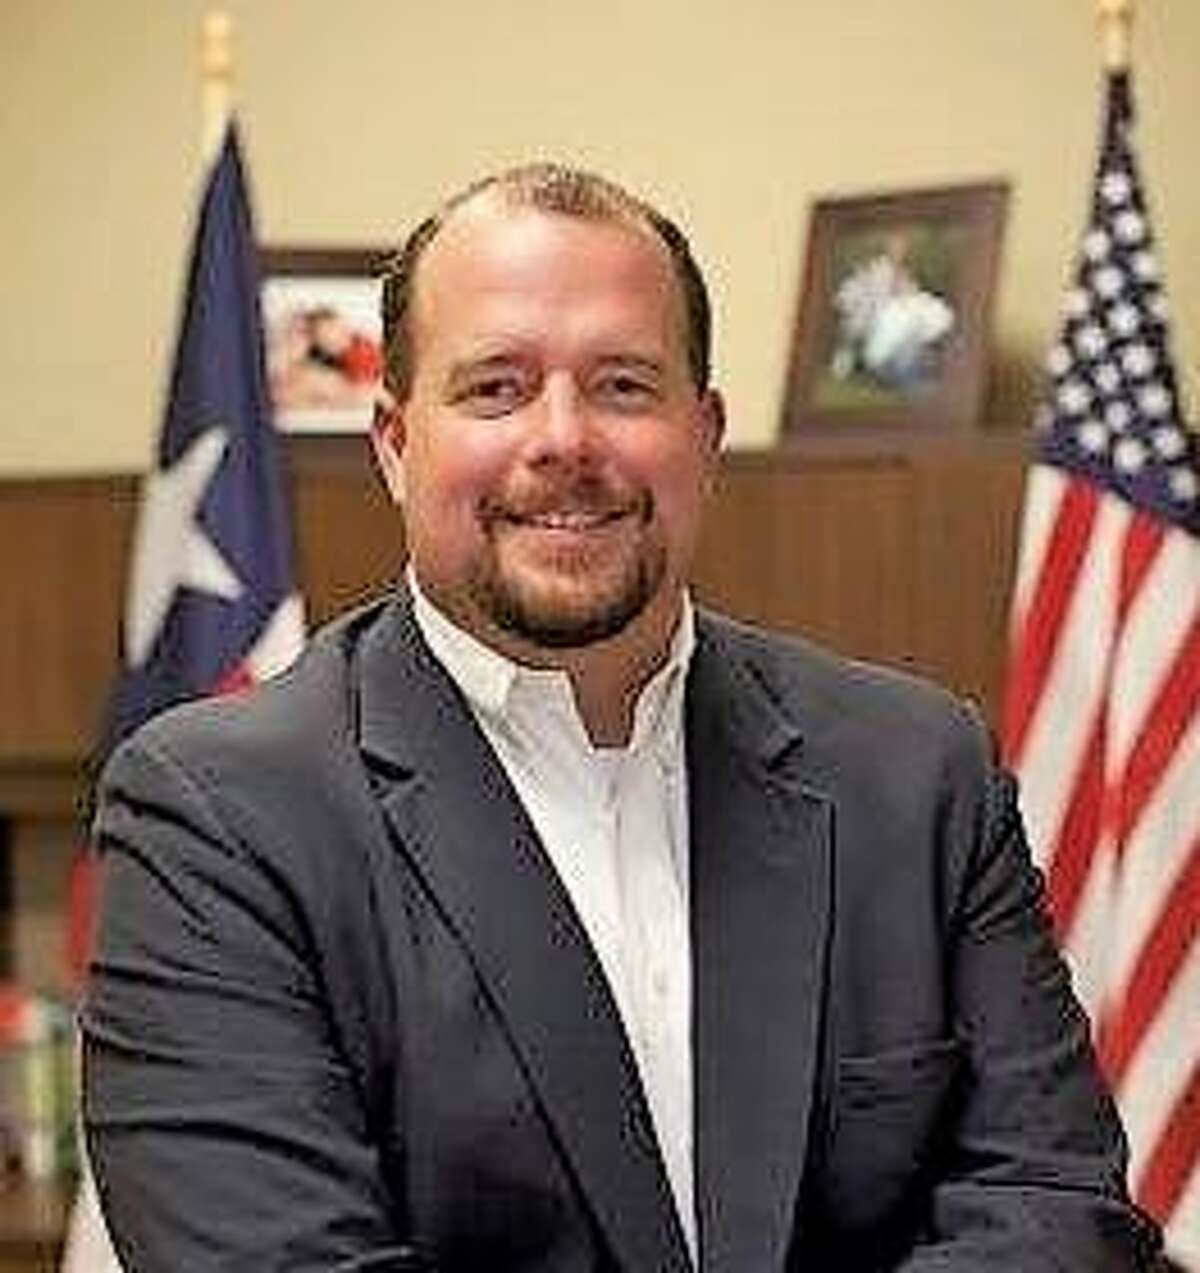 Brazoria County Precinct 2 County Commissioner Ryan Cade defeated Dan Davis in a GOP primary challenge.